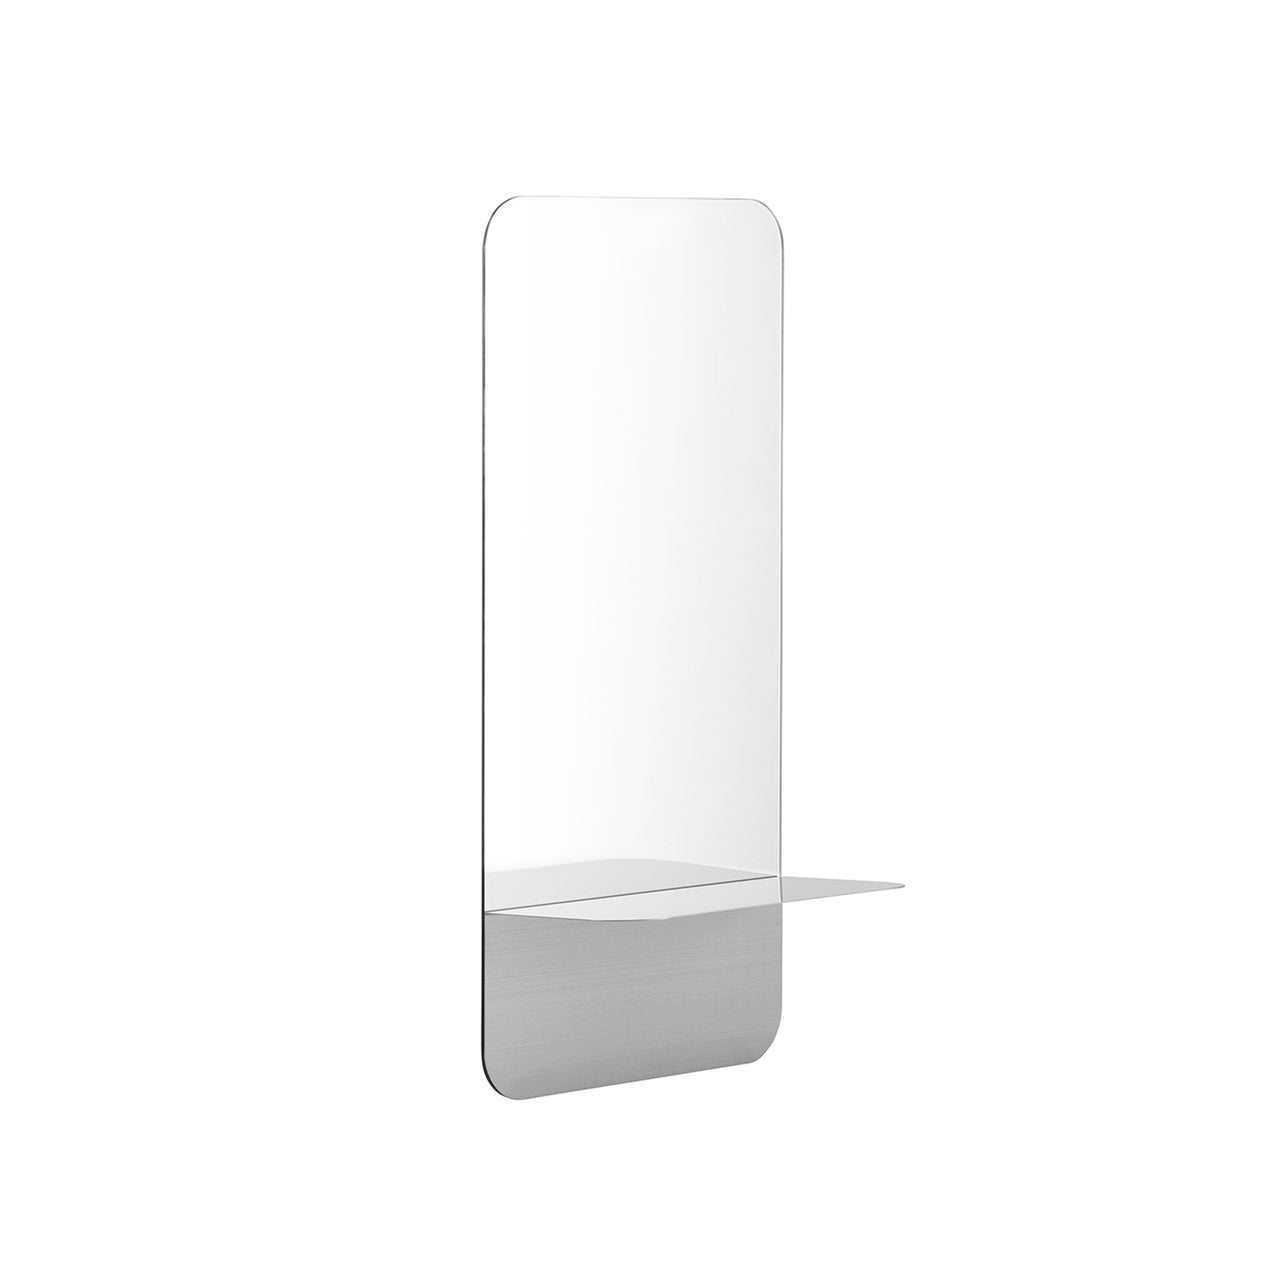 Horizon Mirror Collection: Rectangular + Vertical + Stainless Steel